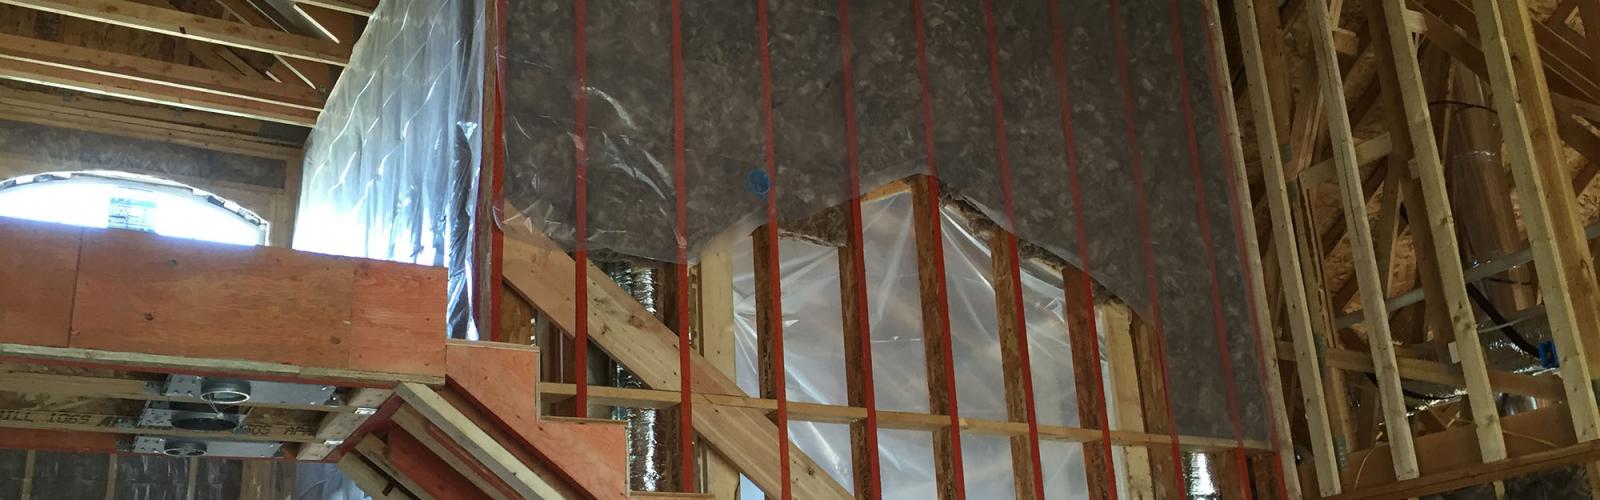 Fiberglass insulation batts, great room stair